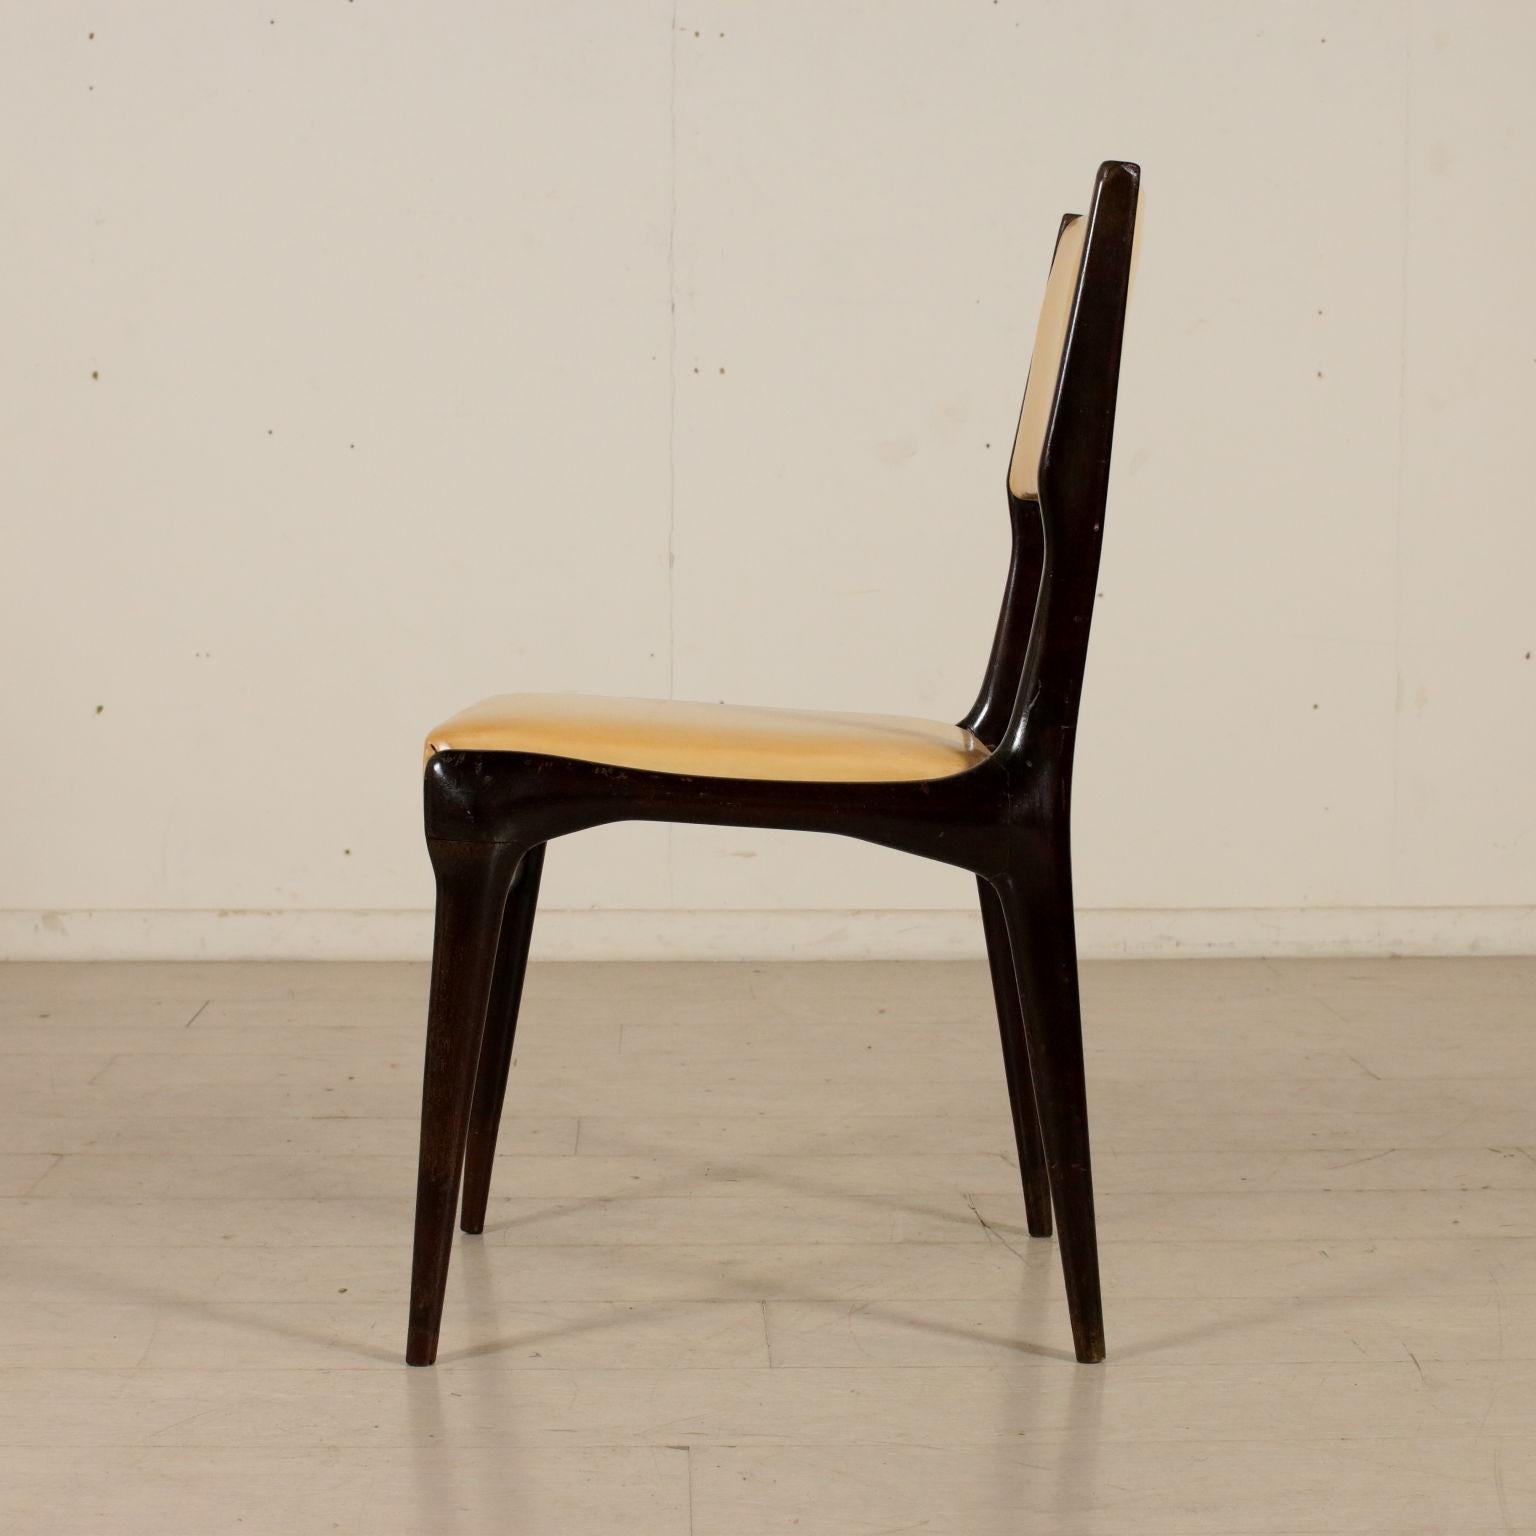 Mid-20th Century Set of Chairs Designed by Carlo de Carli Skai Vintage, Italy, 1950s